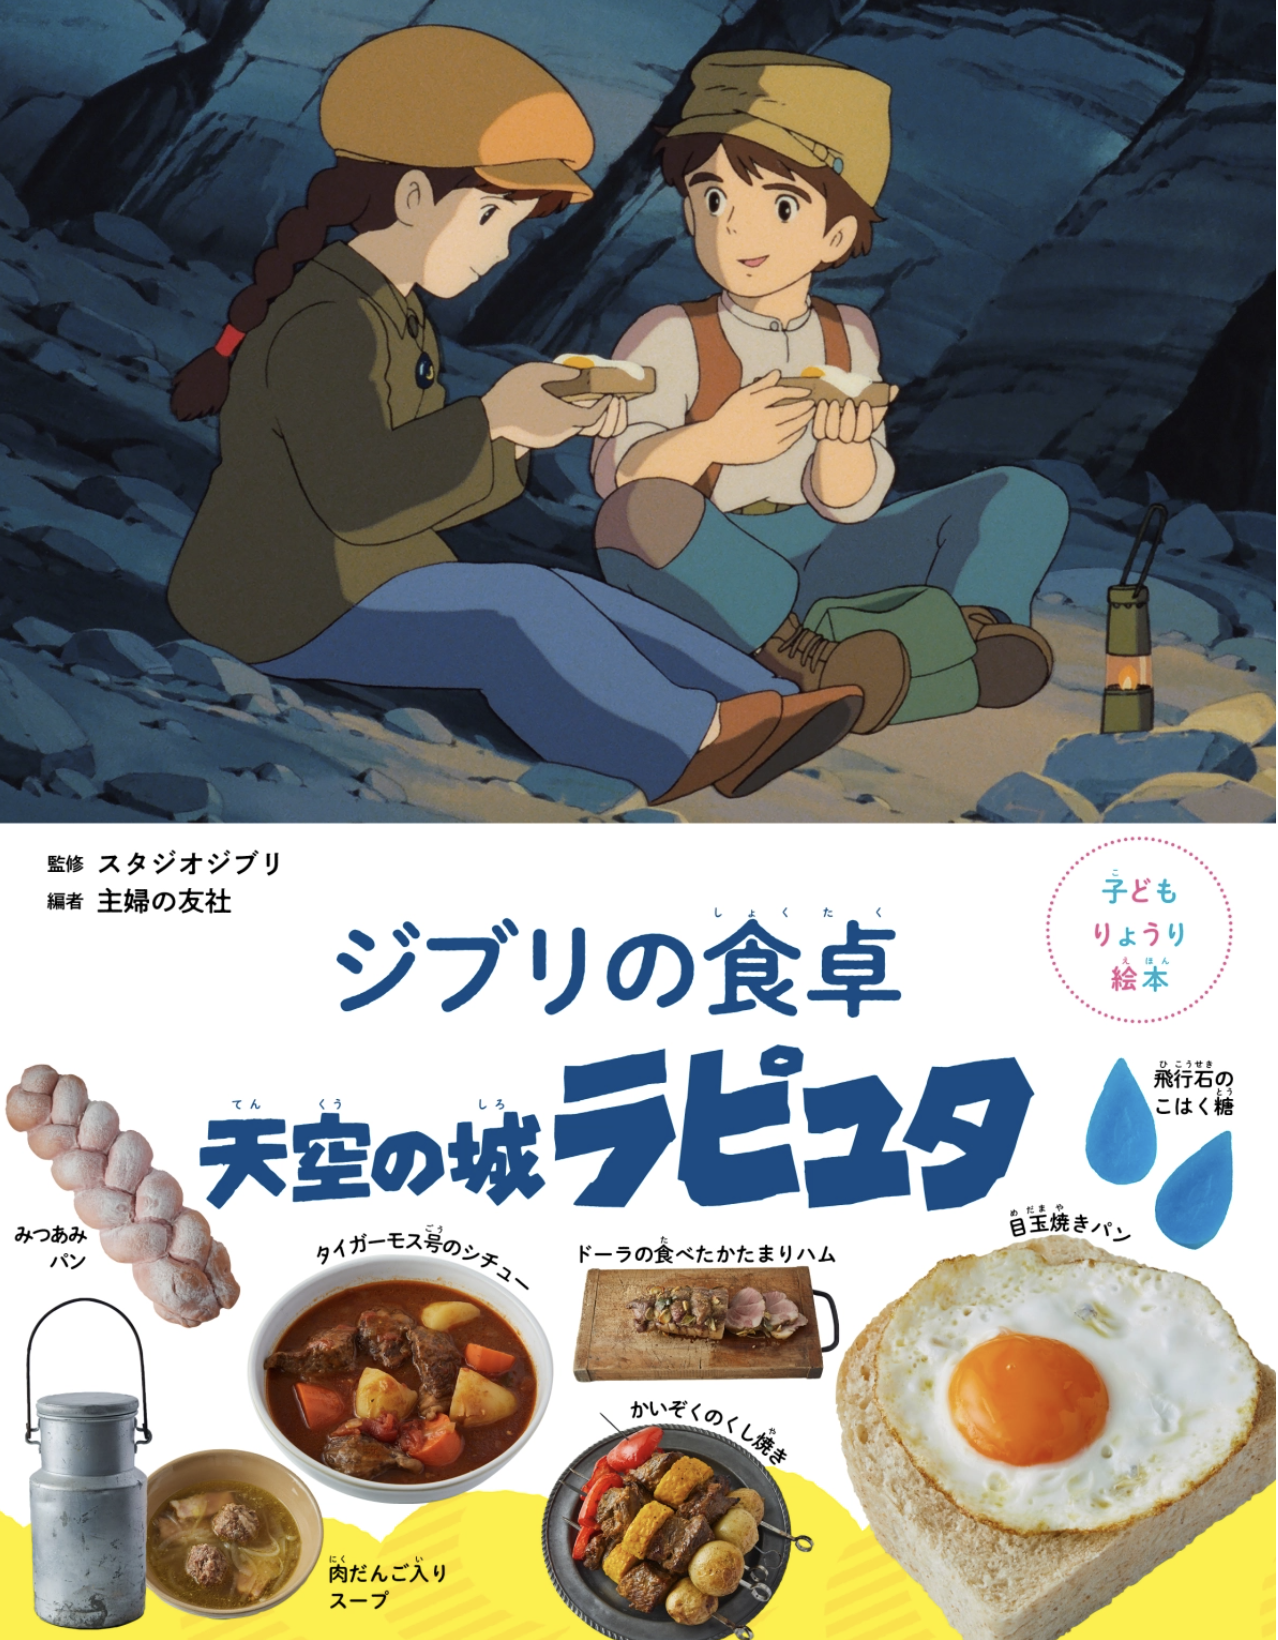 13 Essential Isekai Manga (and Light Novels) | Books and Bao